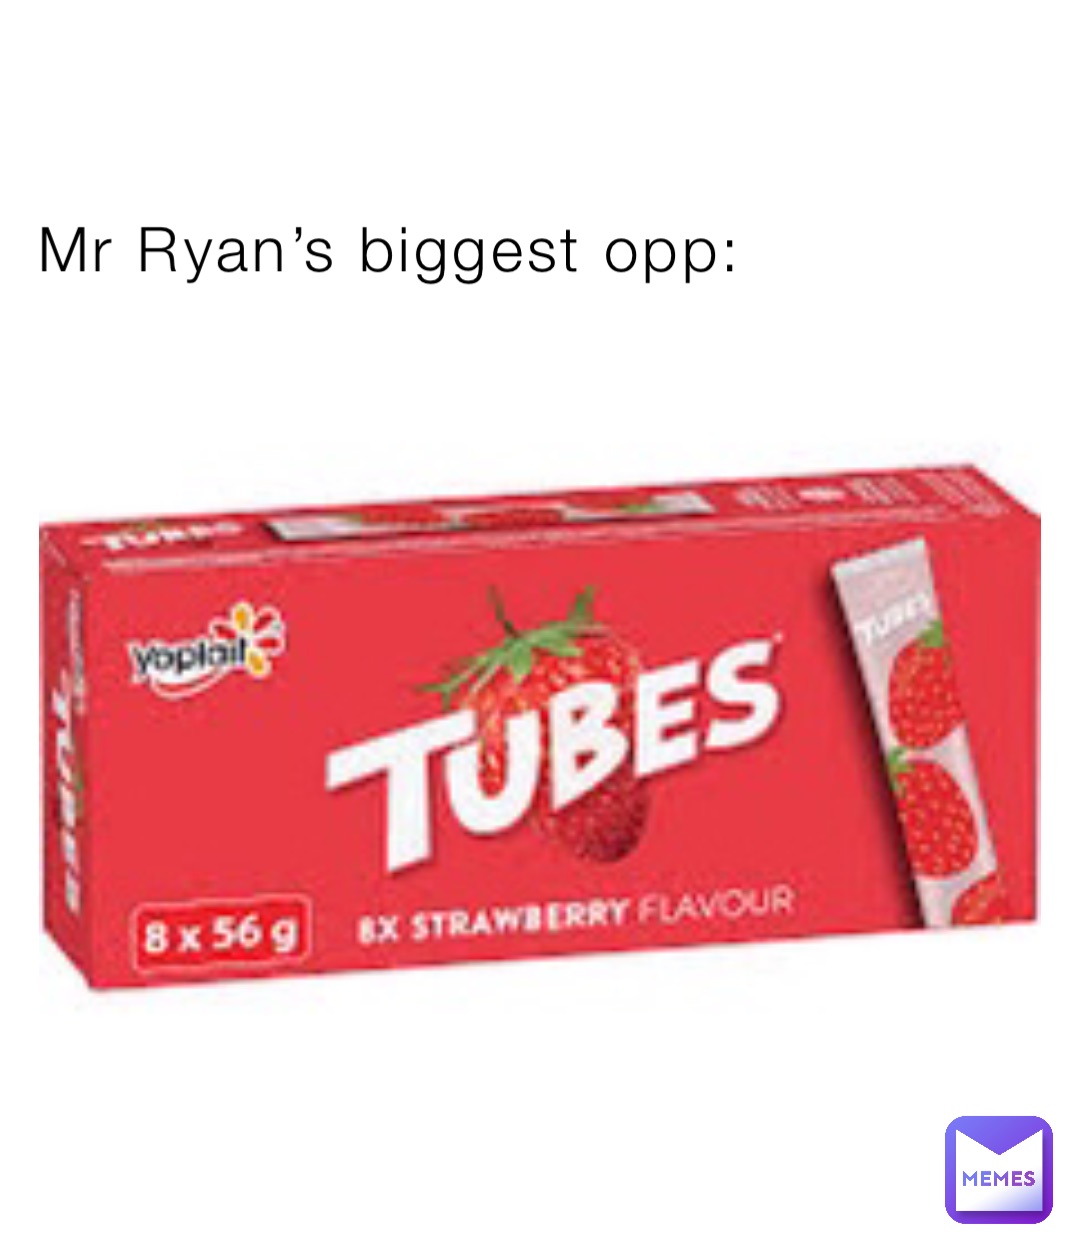 Mr Ryan’s biggest opp: